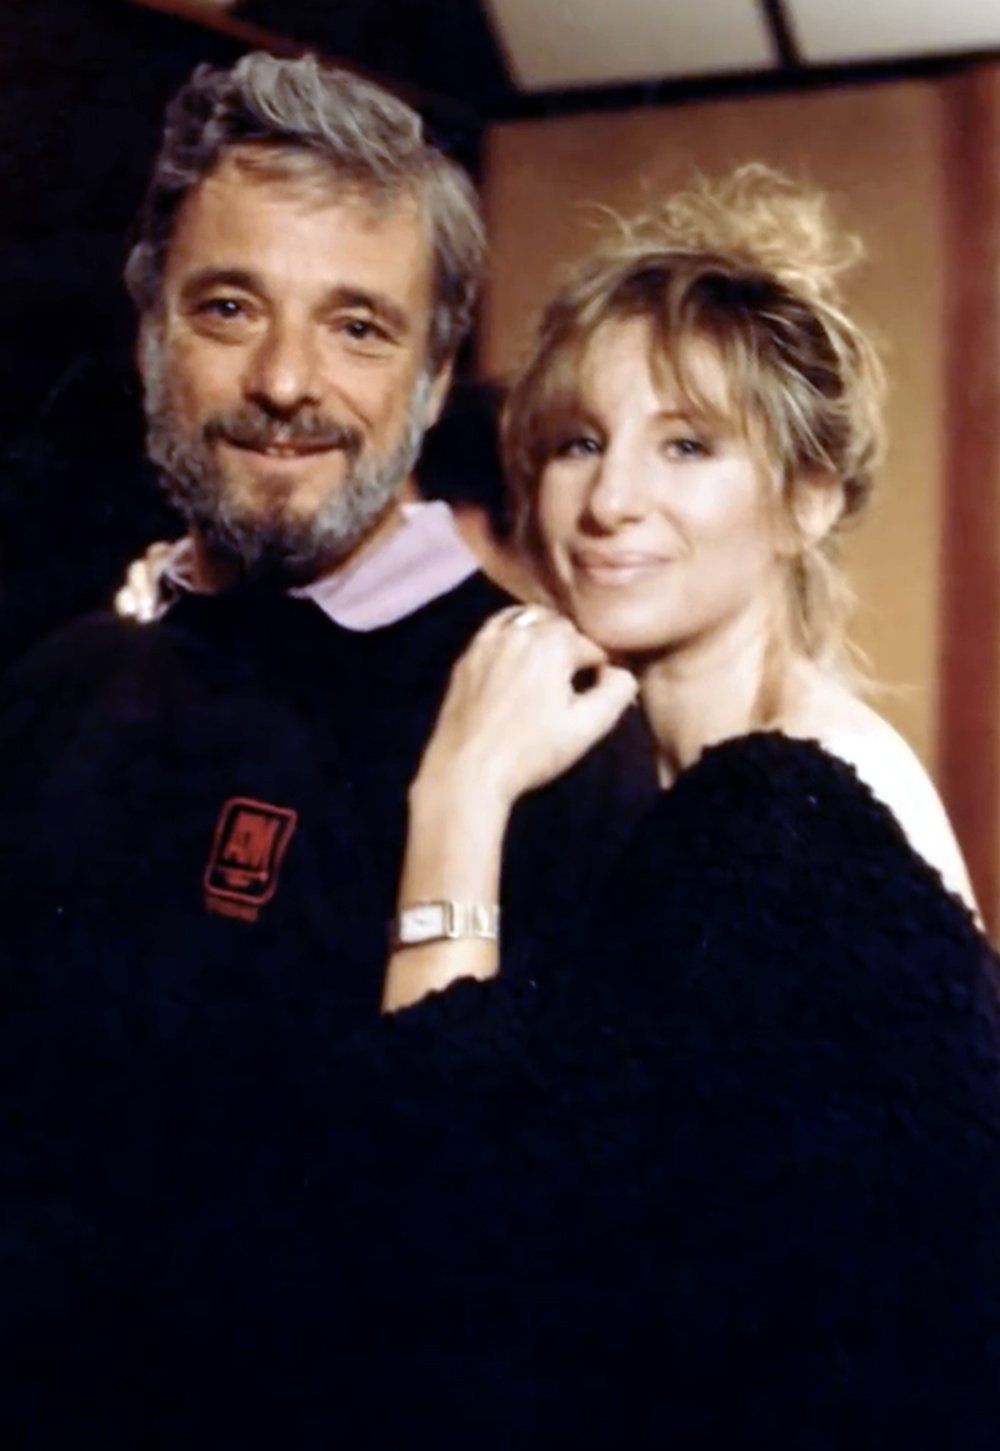 Stephen Sondheim and Barbra Streisand pose together.